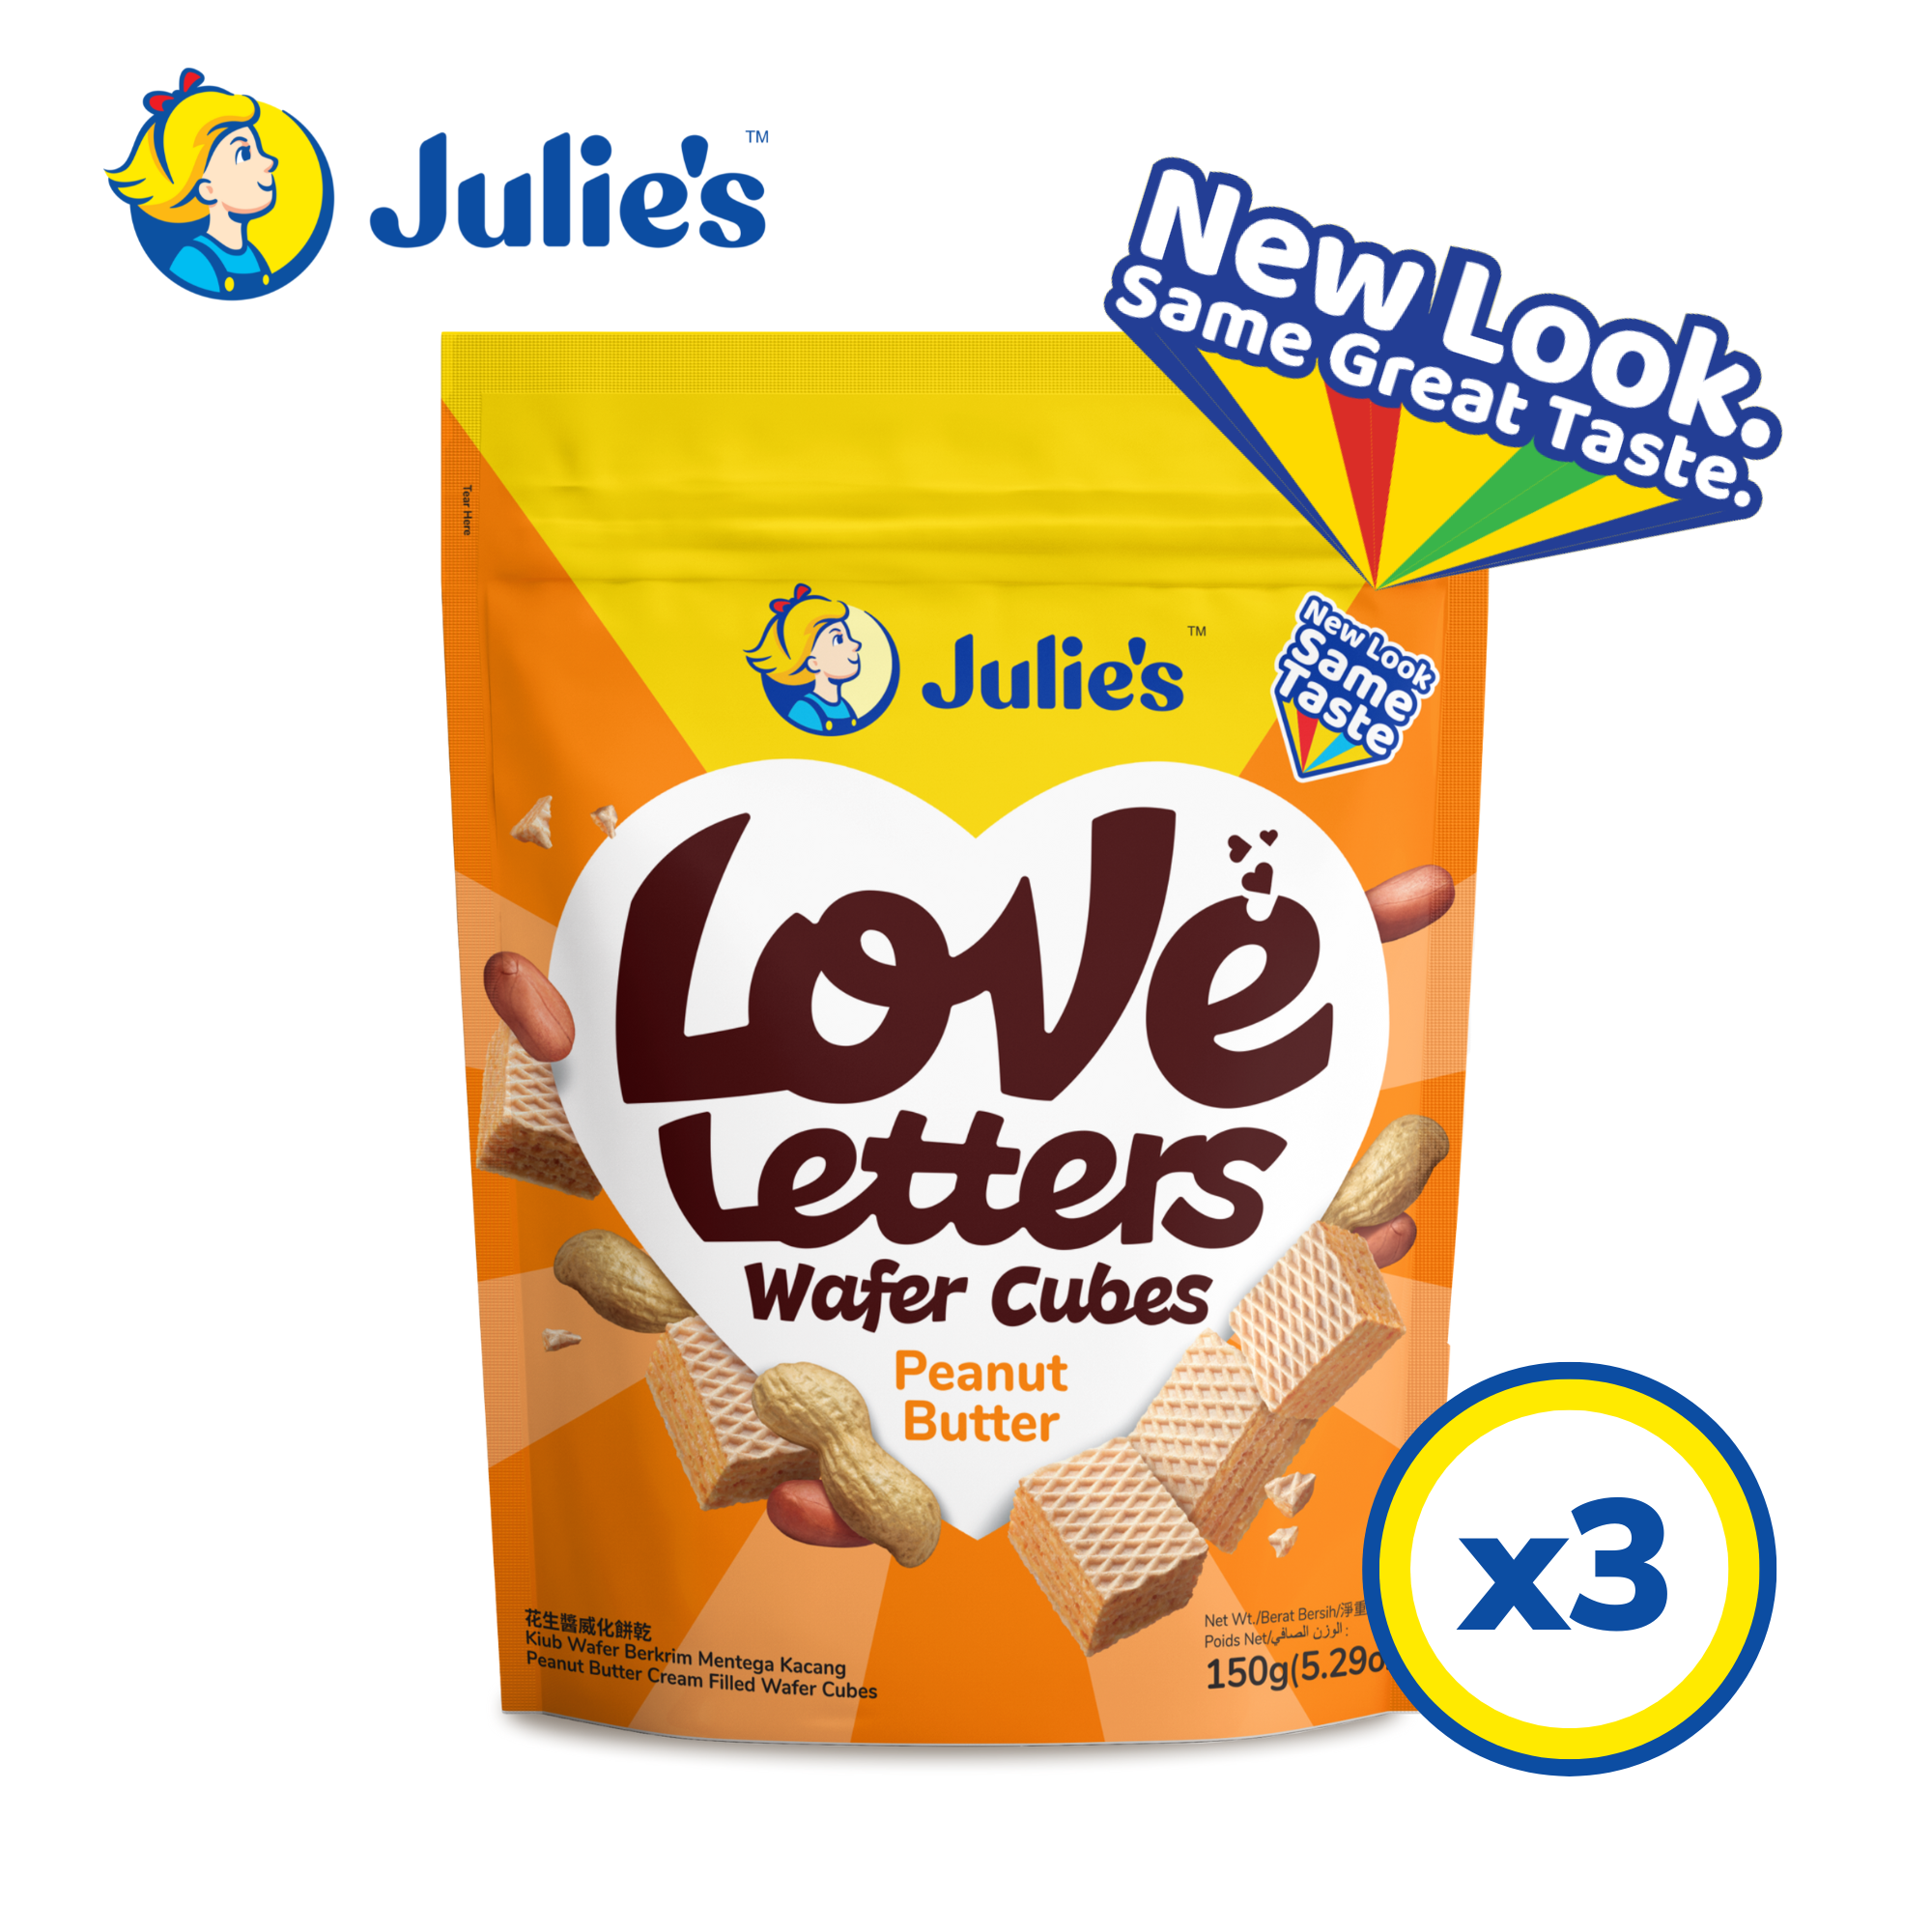 Julie’s Love Letters Wafer Cubes Peanut Butter 150g x 3 packs